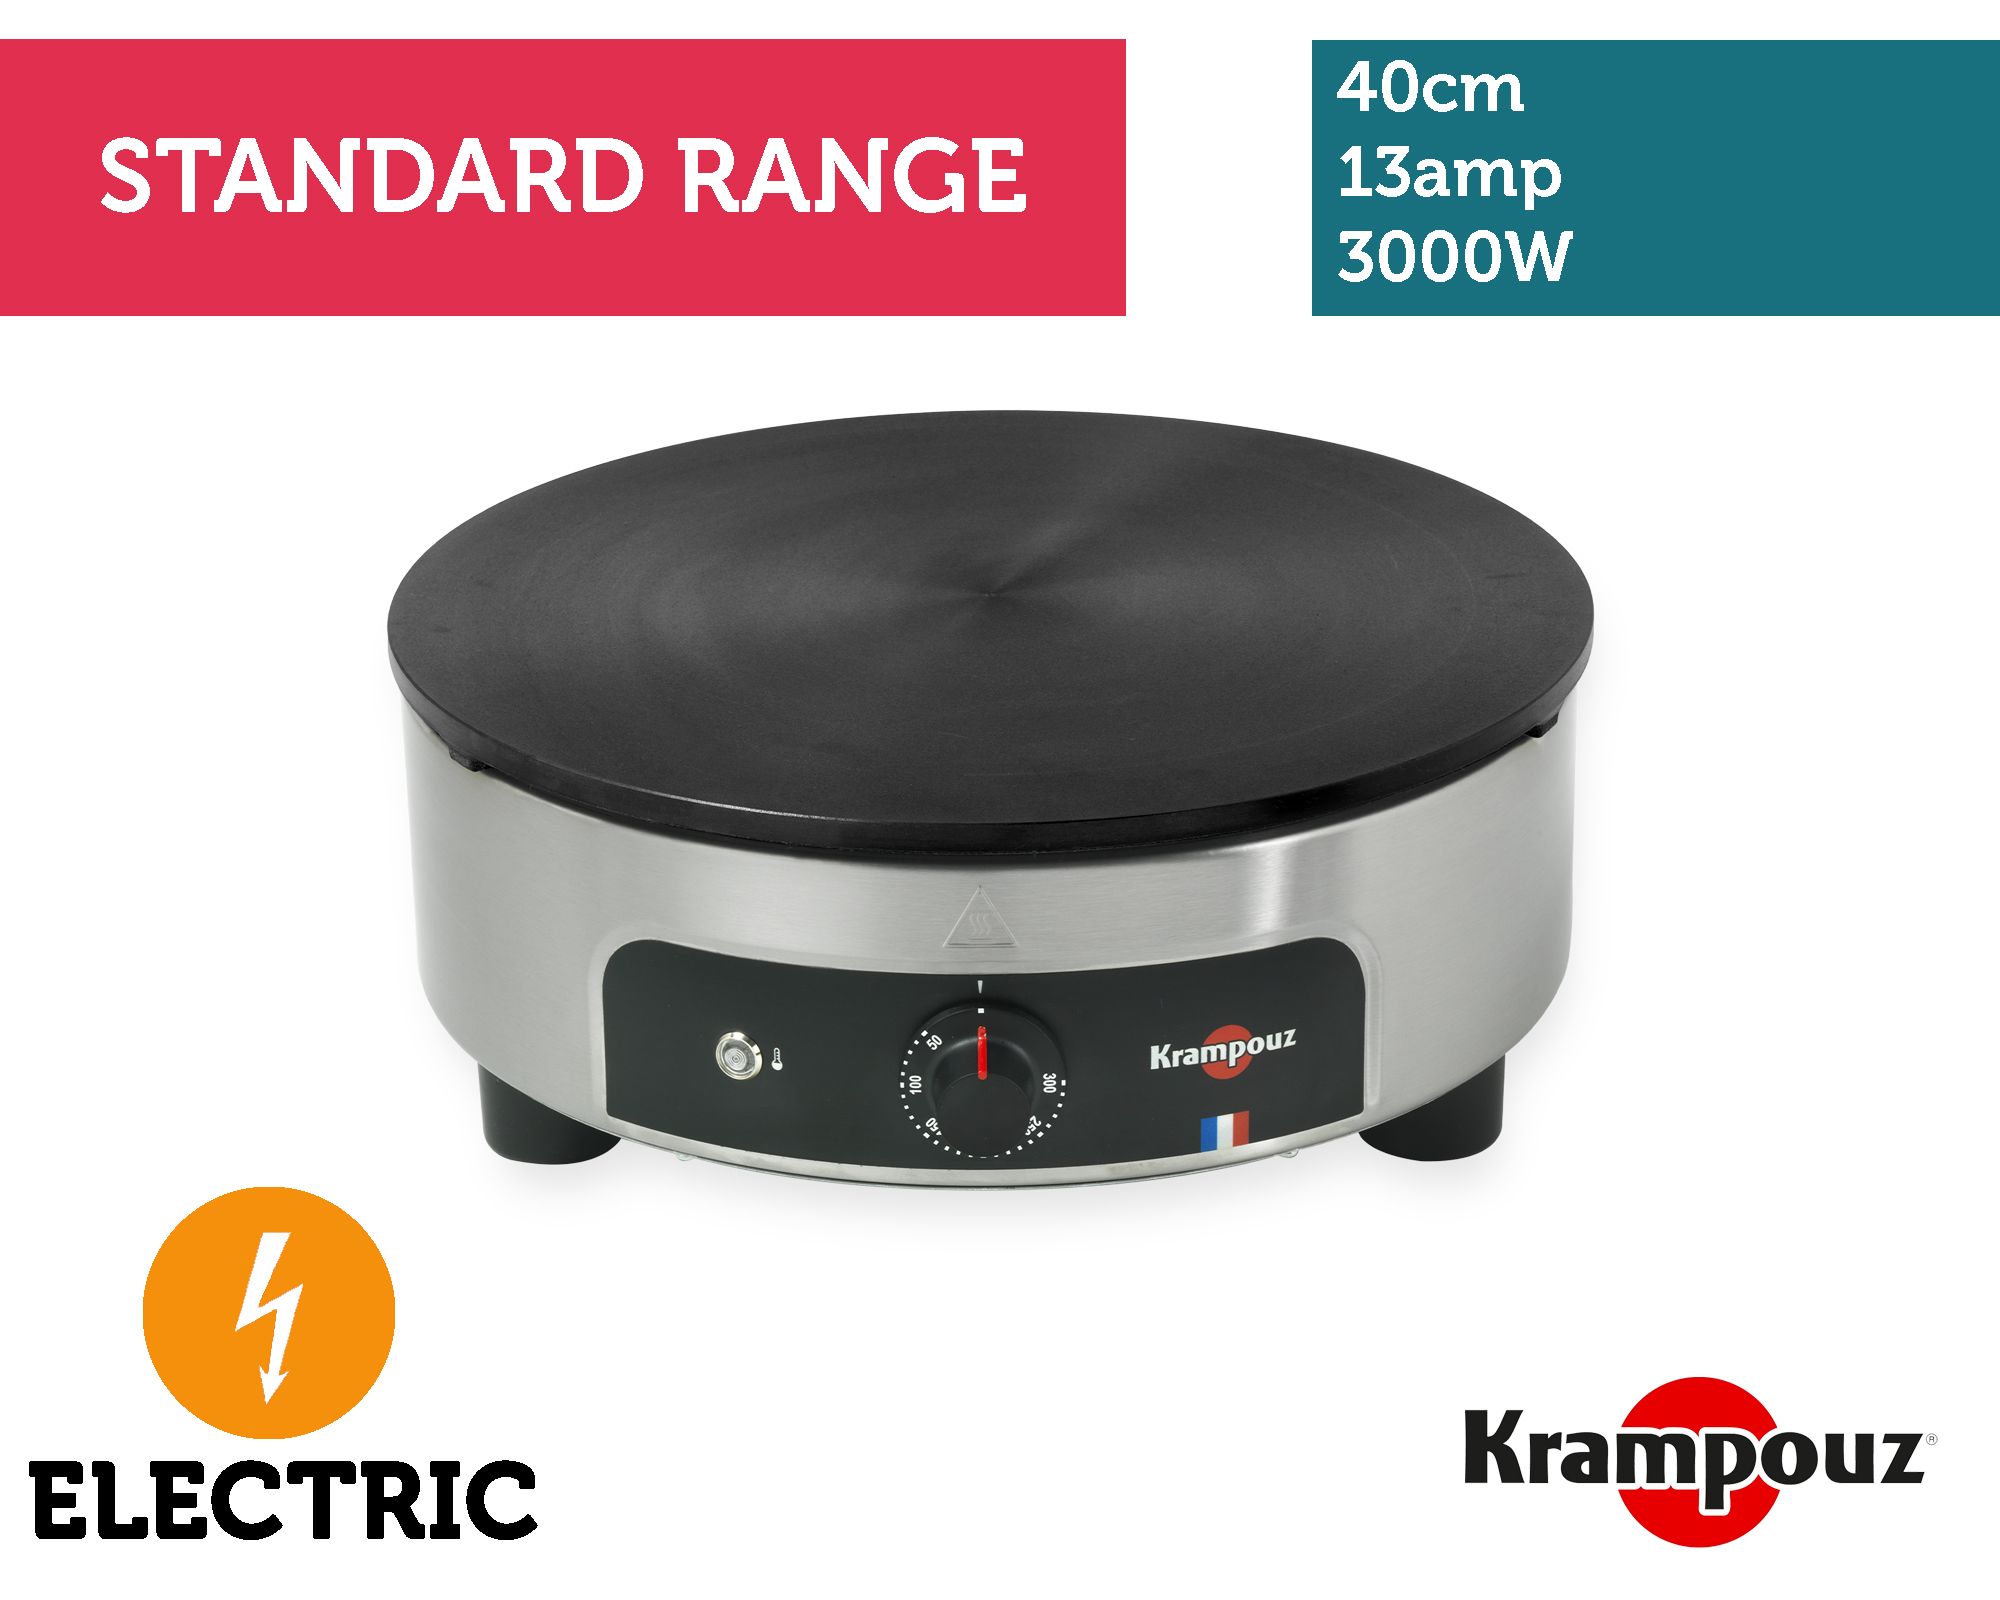 Standard 400mm Make Electric Krampouz Crepe